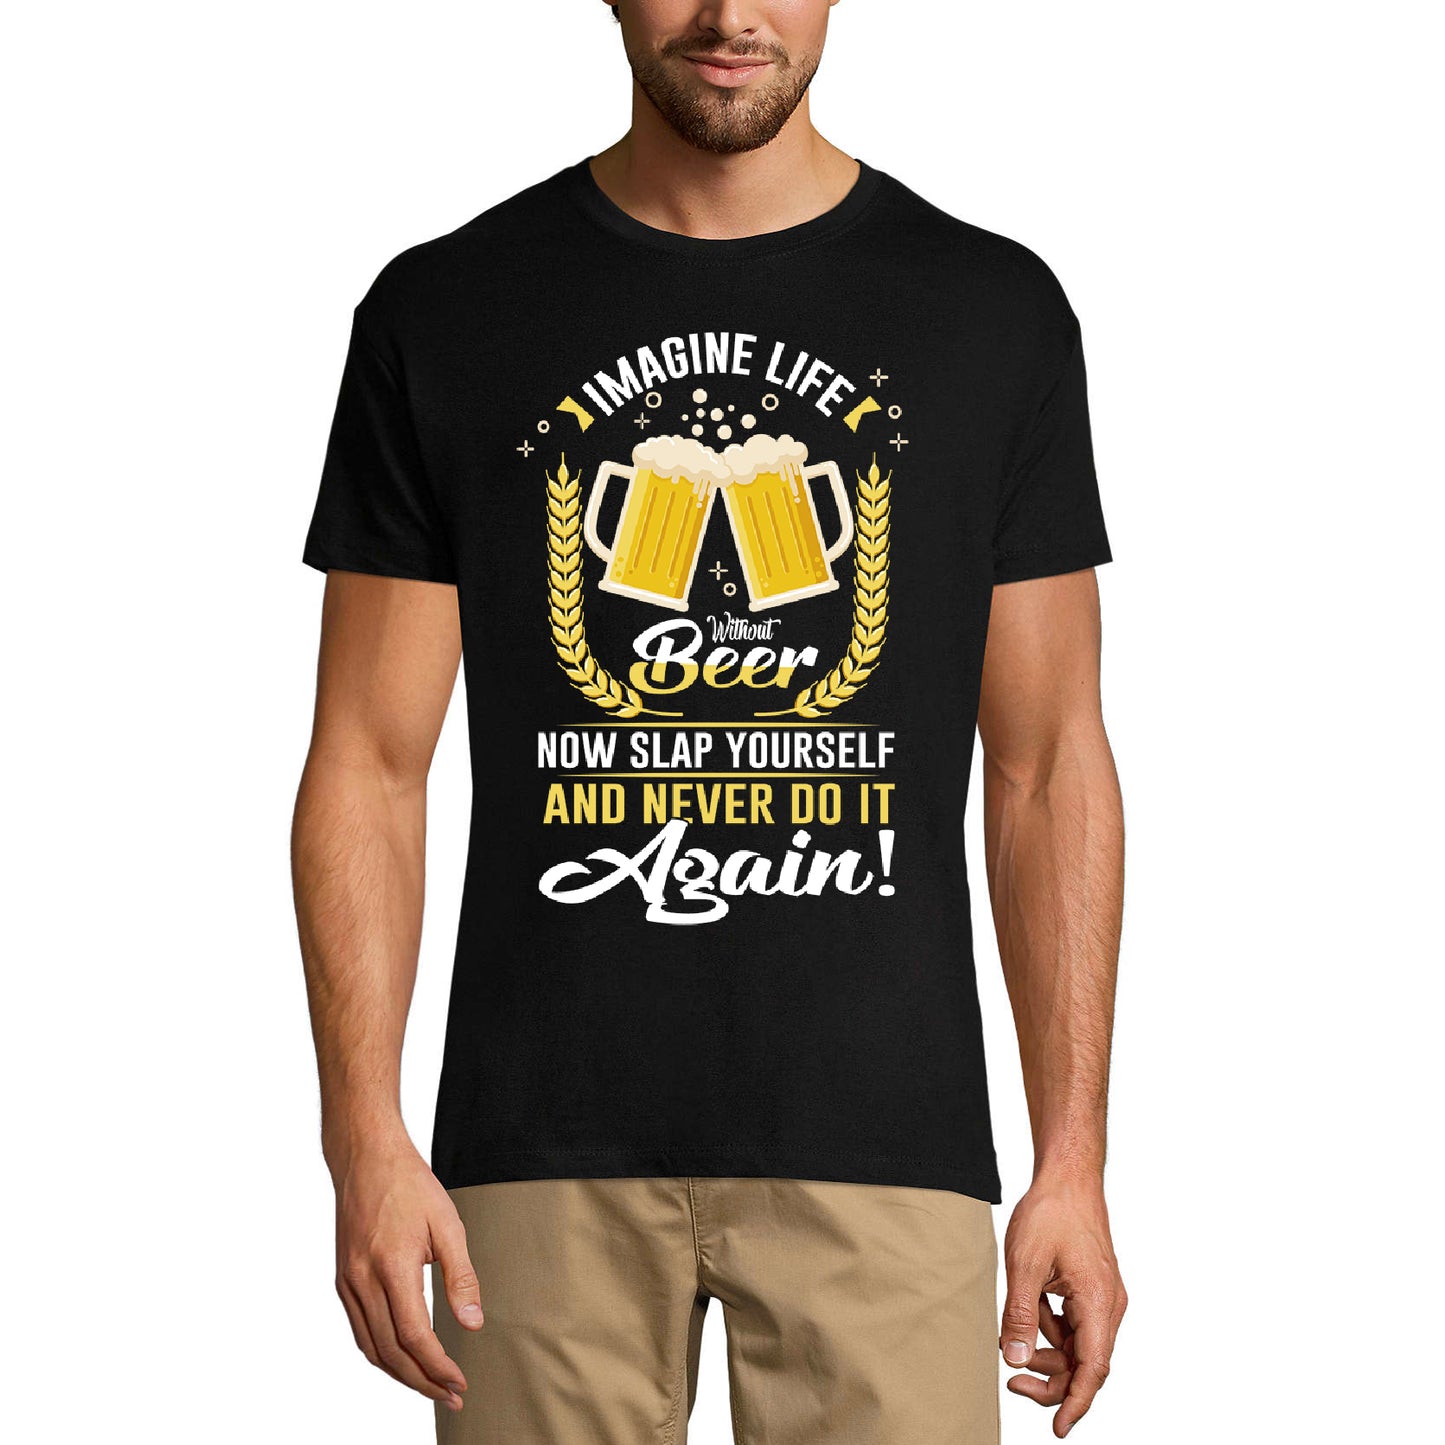 ULTRABASIC Men's T-Shirt Imagine Life Without Beer - Funny Slogan Saying Humor Tee Shirt